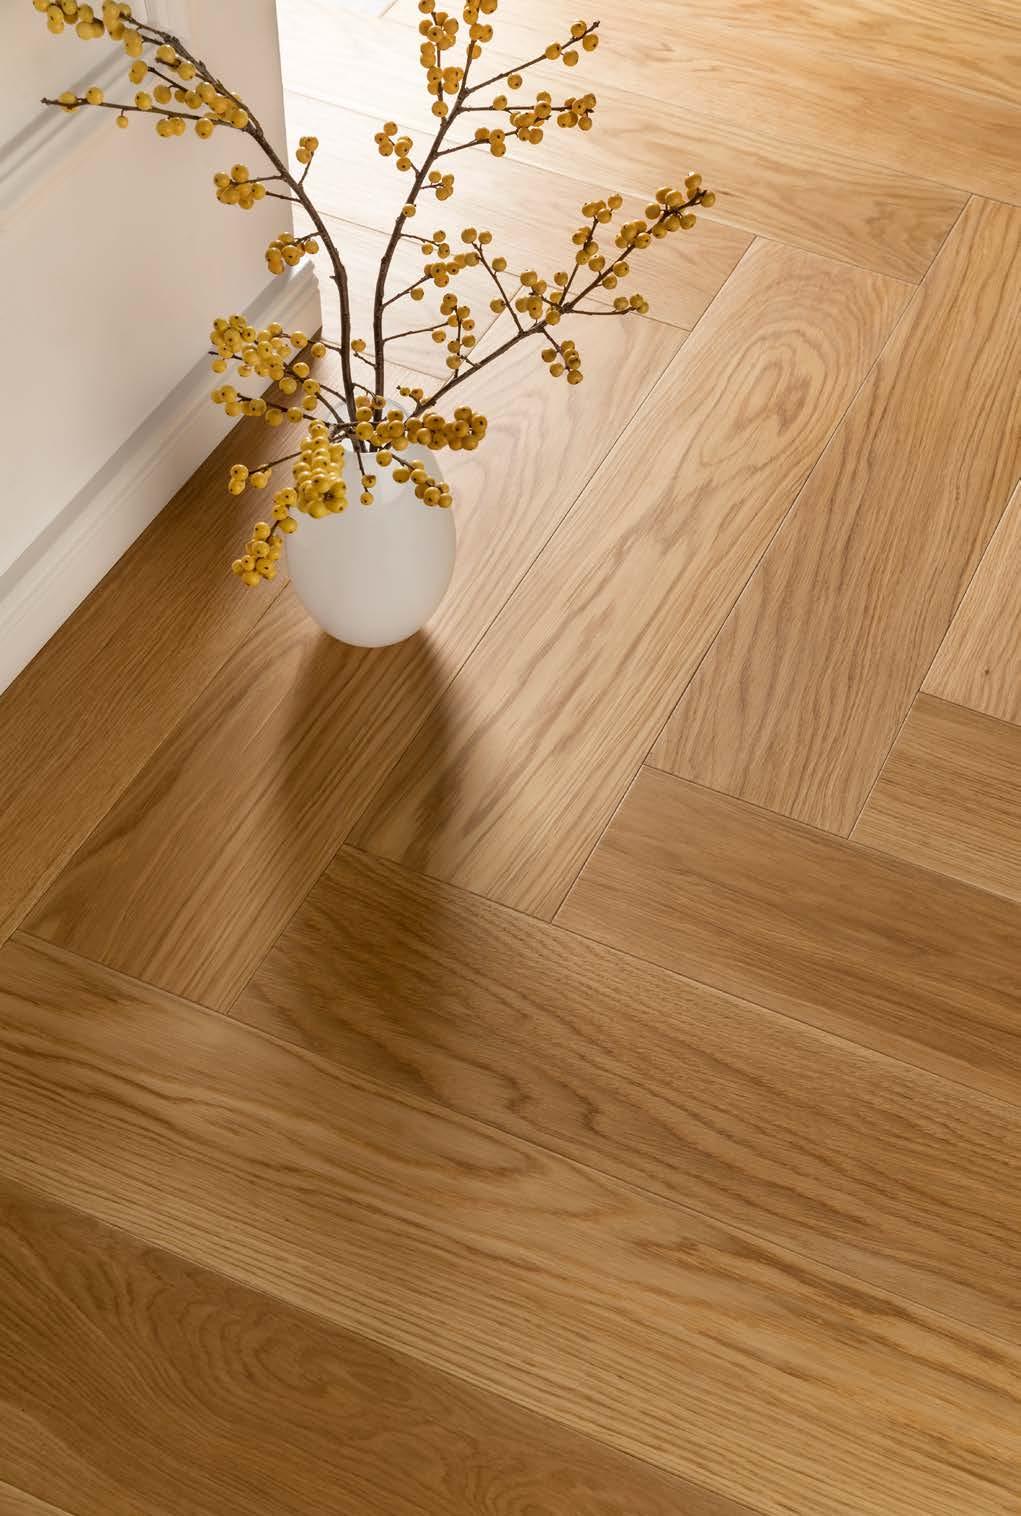 BOEN Herringbone Click Herringbone is an eye-catching flooring pattern that makes your floor stand out.